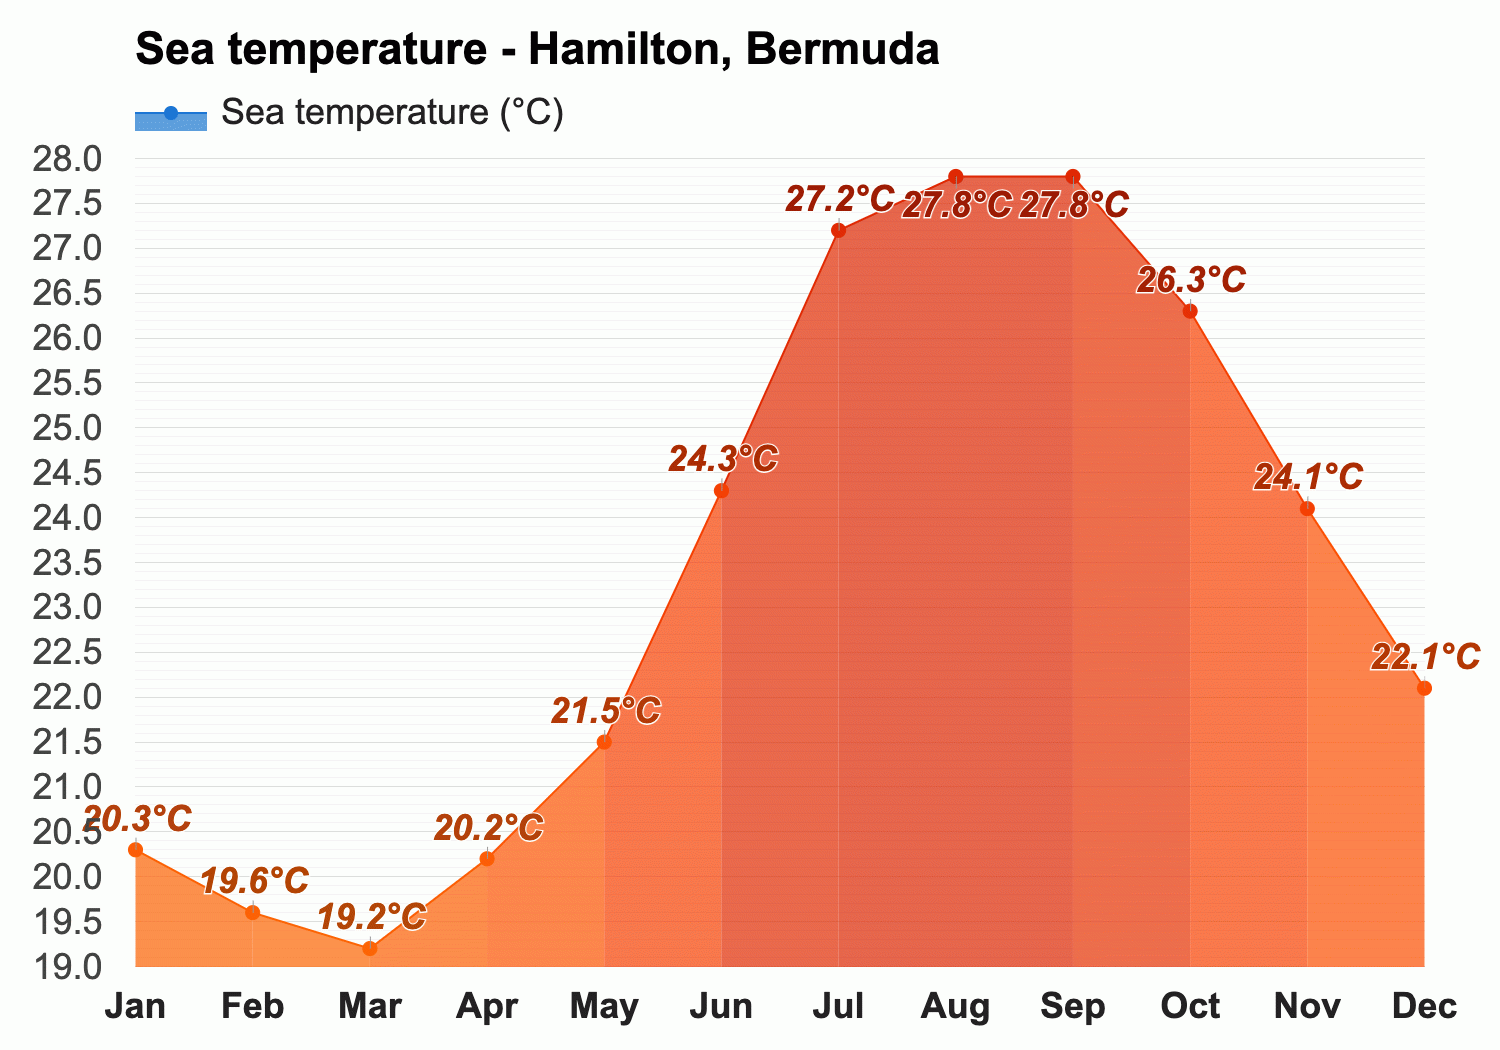 temperature in bermuda in april